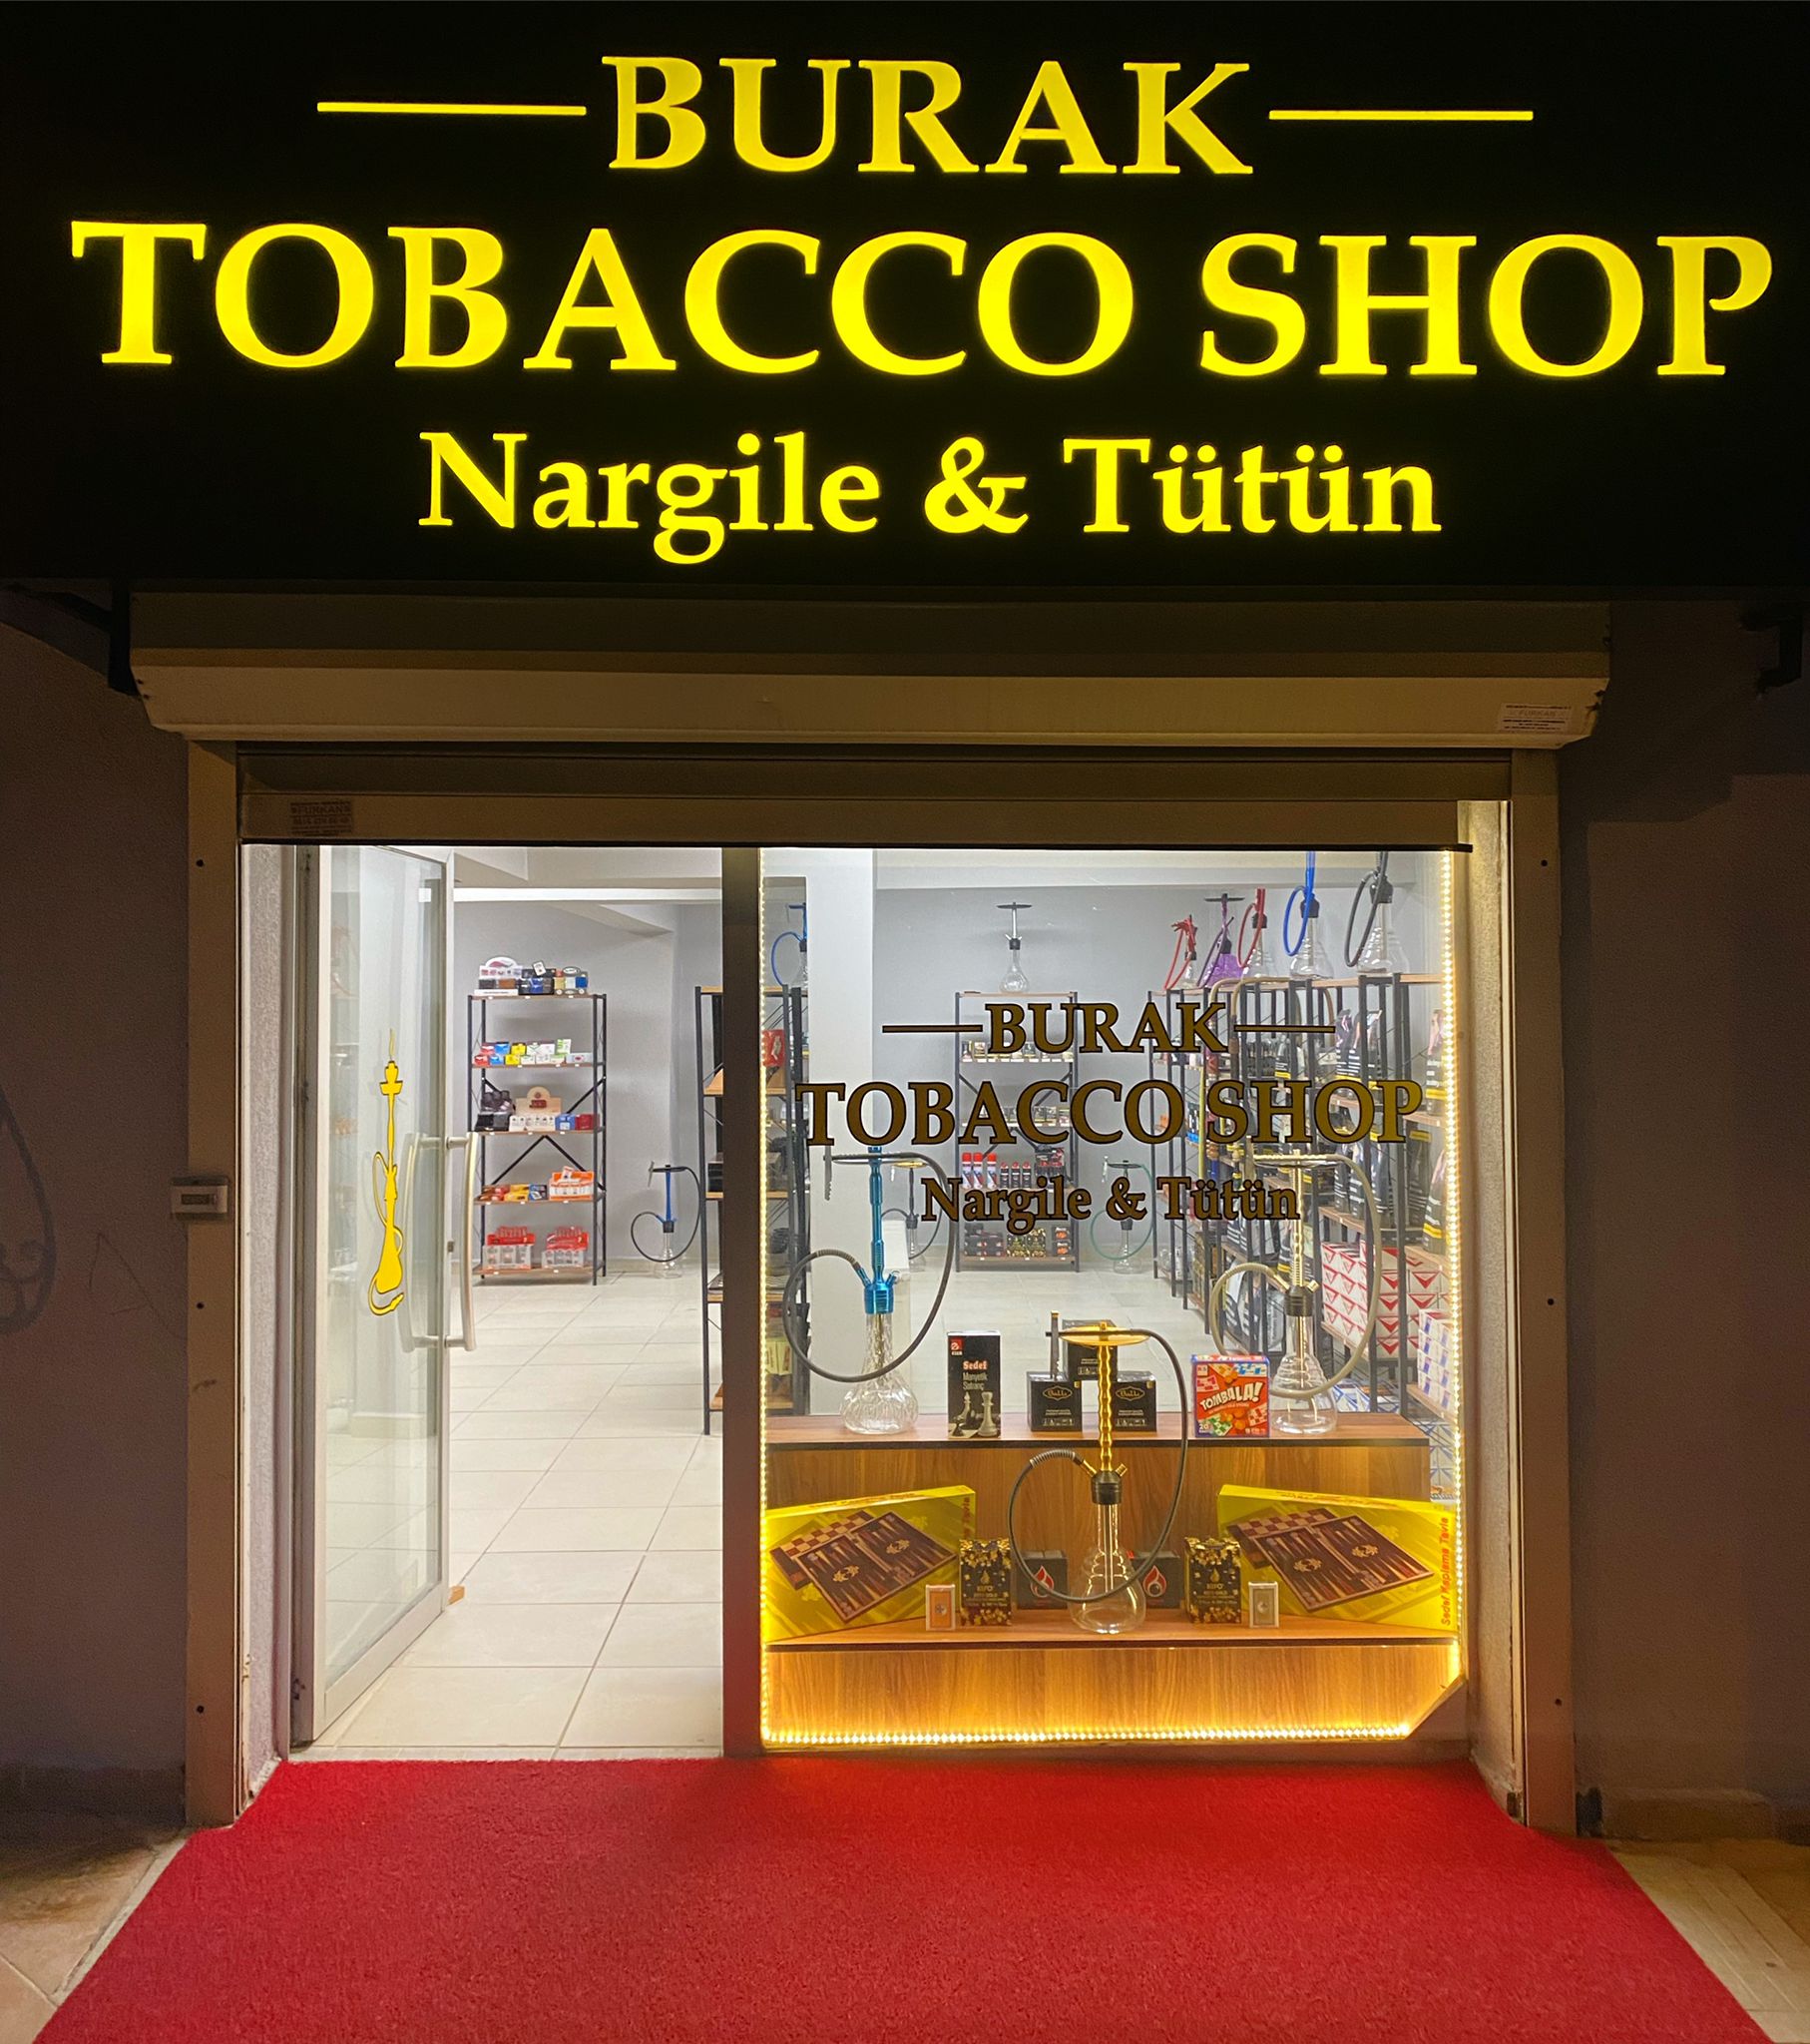 Burak Tobacco Shop